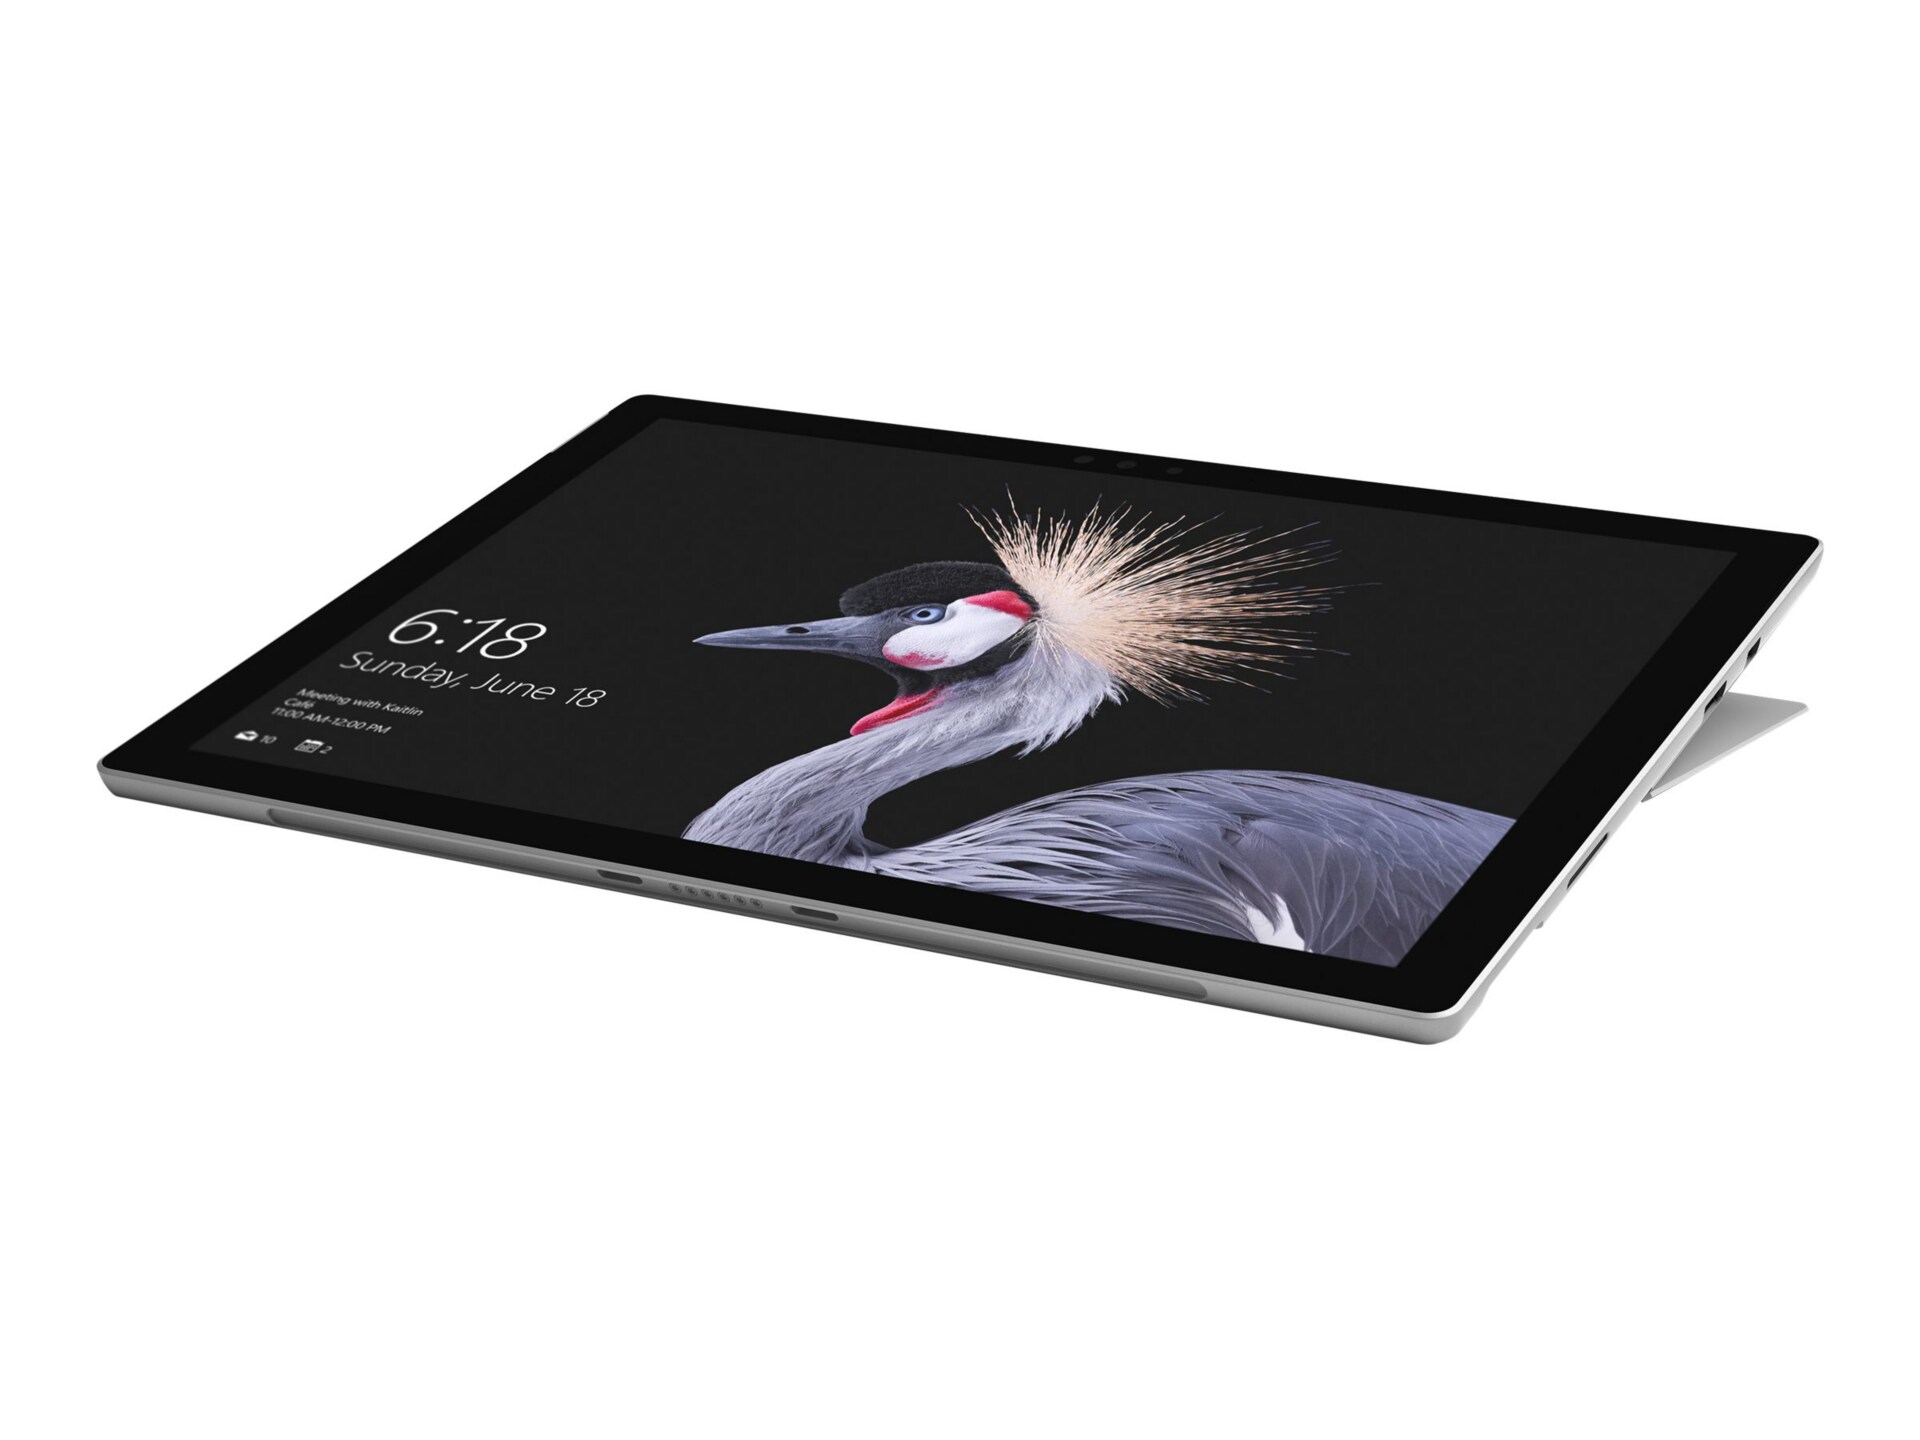 Microsoft Surface Pro - 12.3" - Core m3 7Y30 - 4 GB RAM - 128 GB